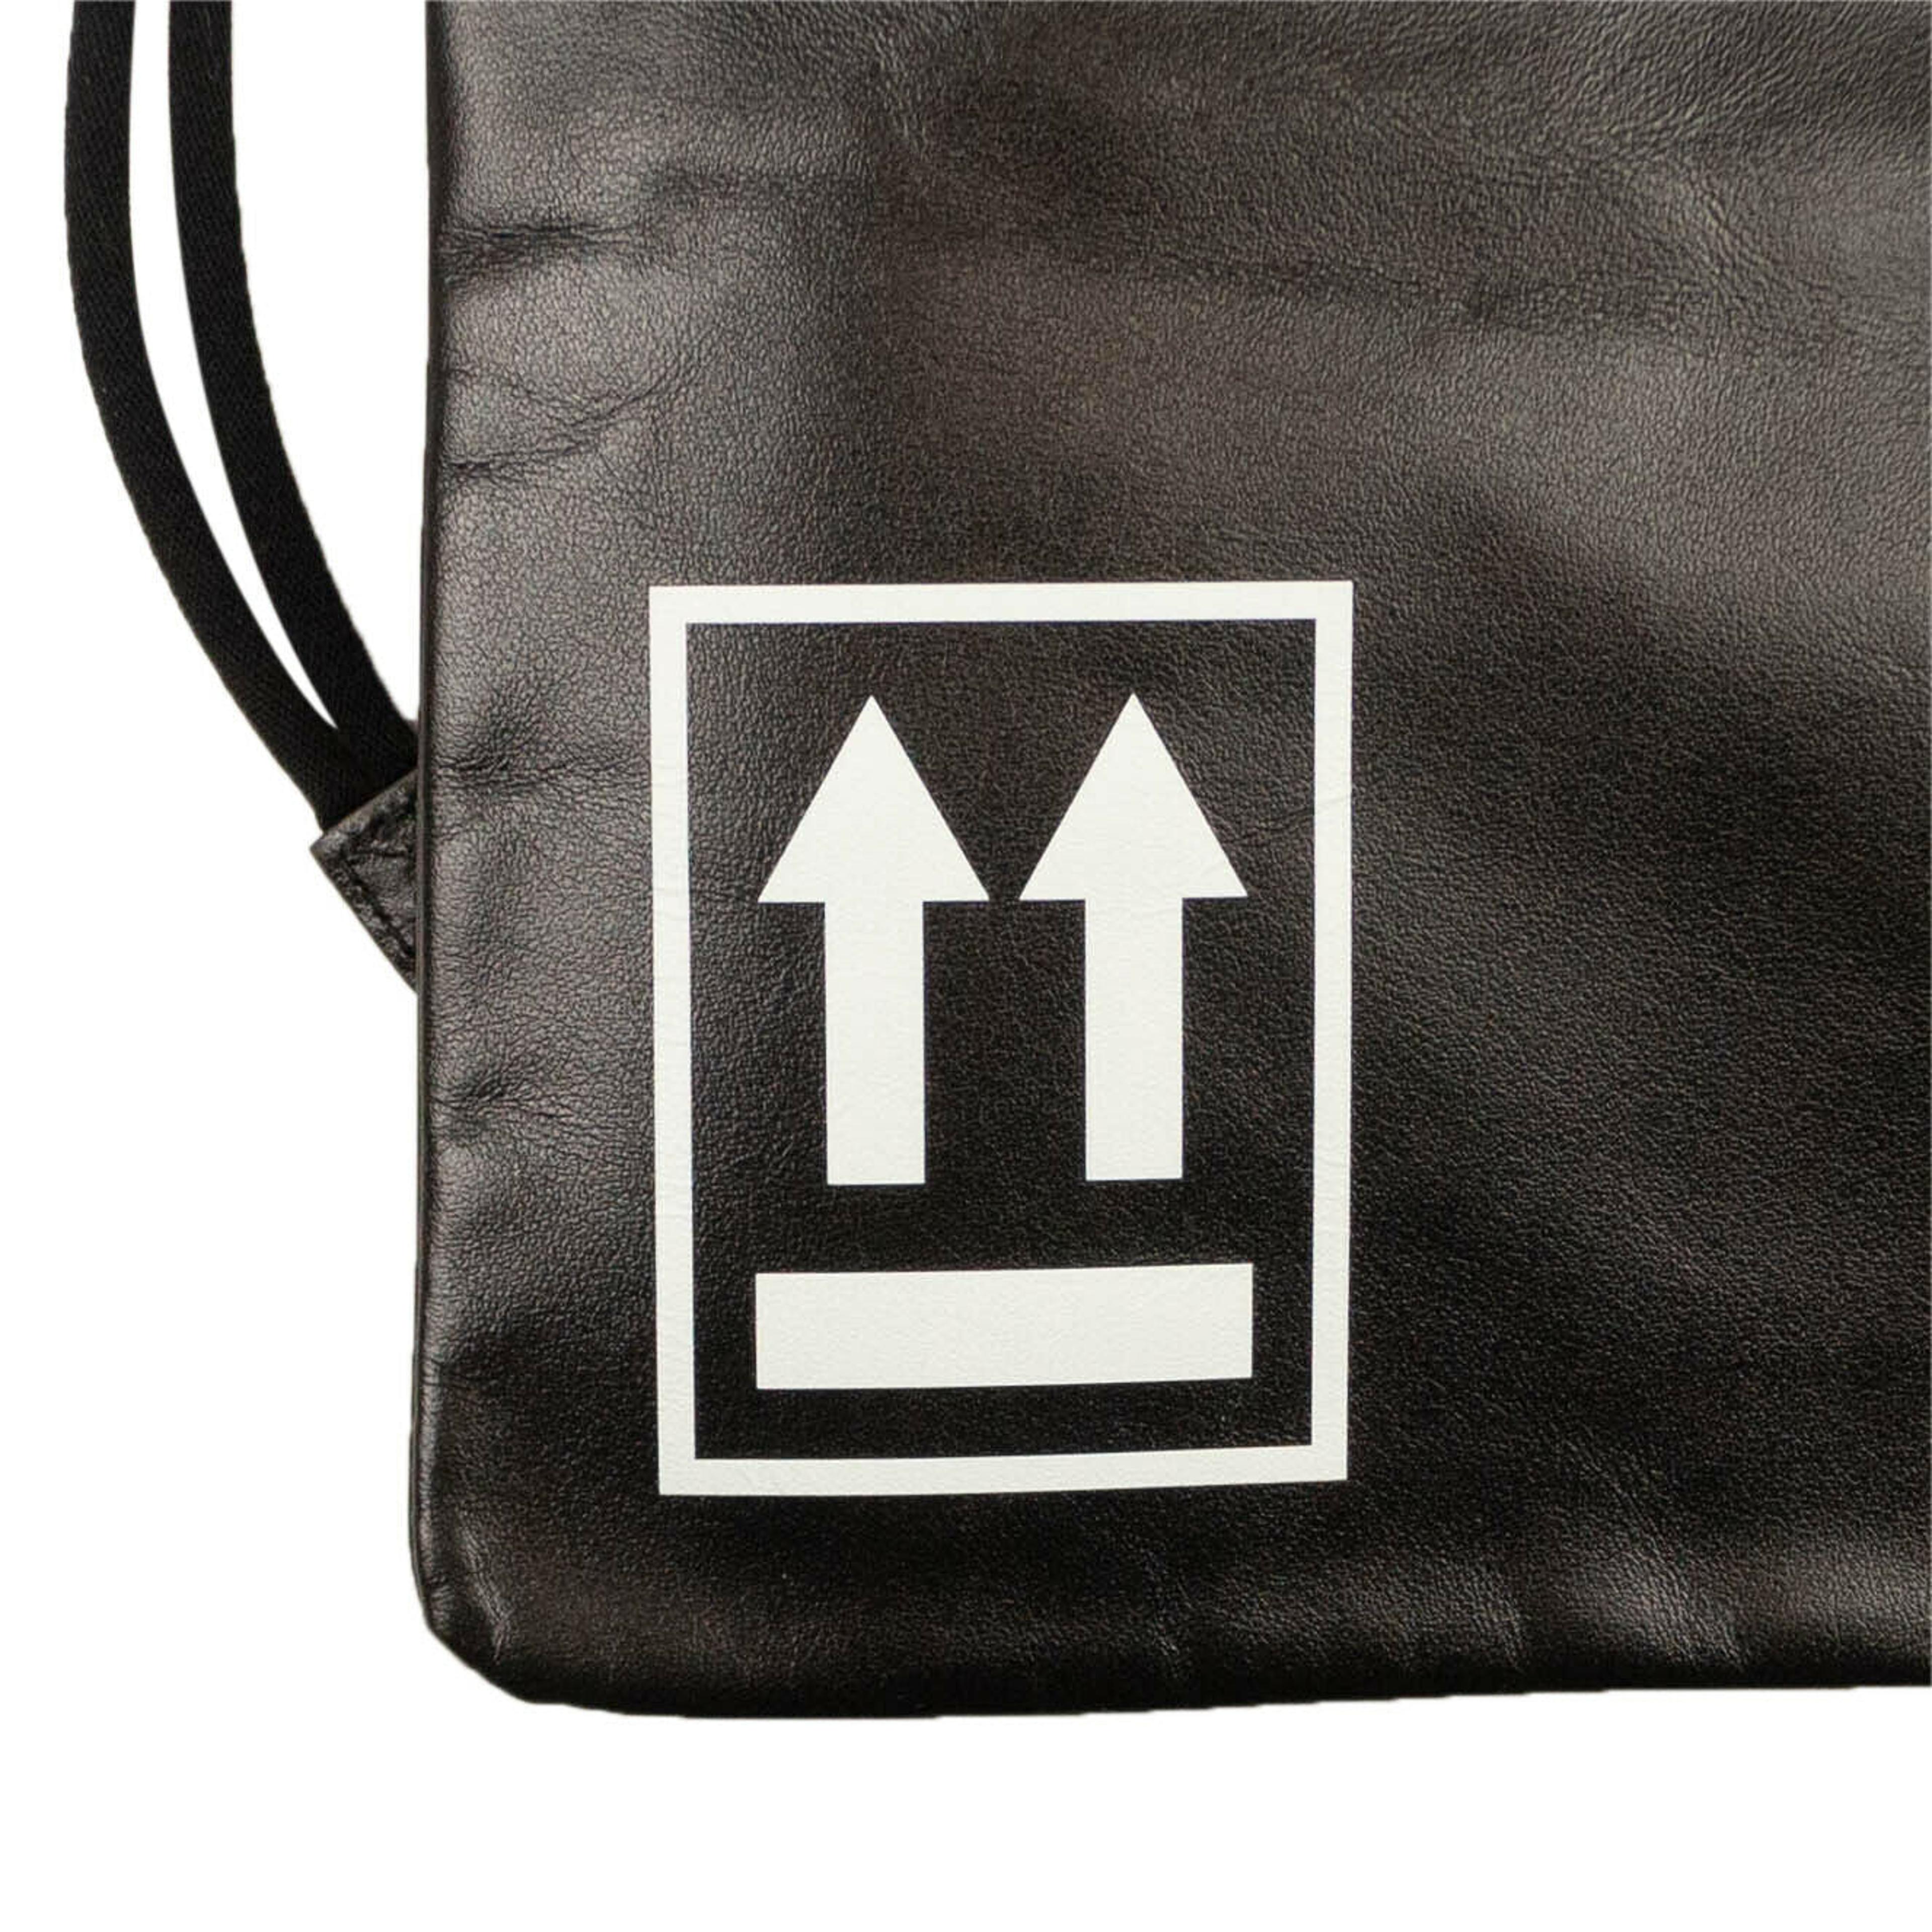 Alternate View 2 of Black Leather Drawstring Bag